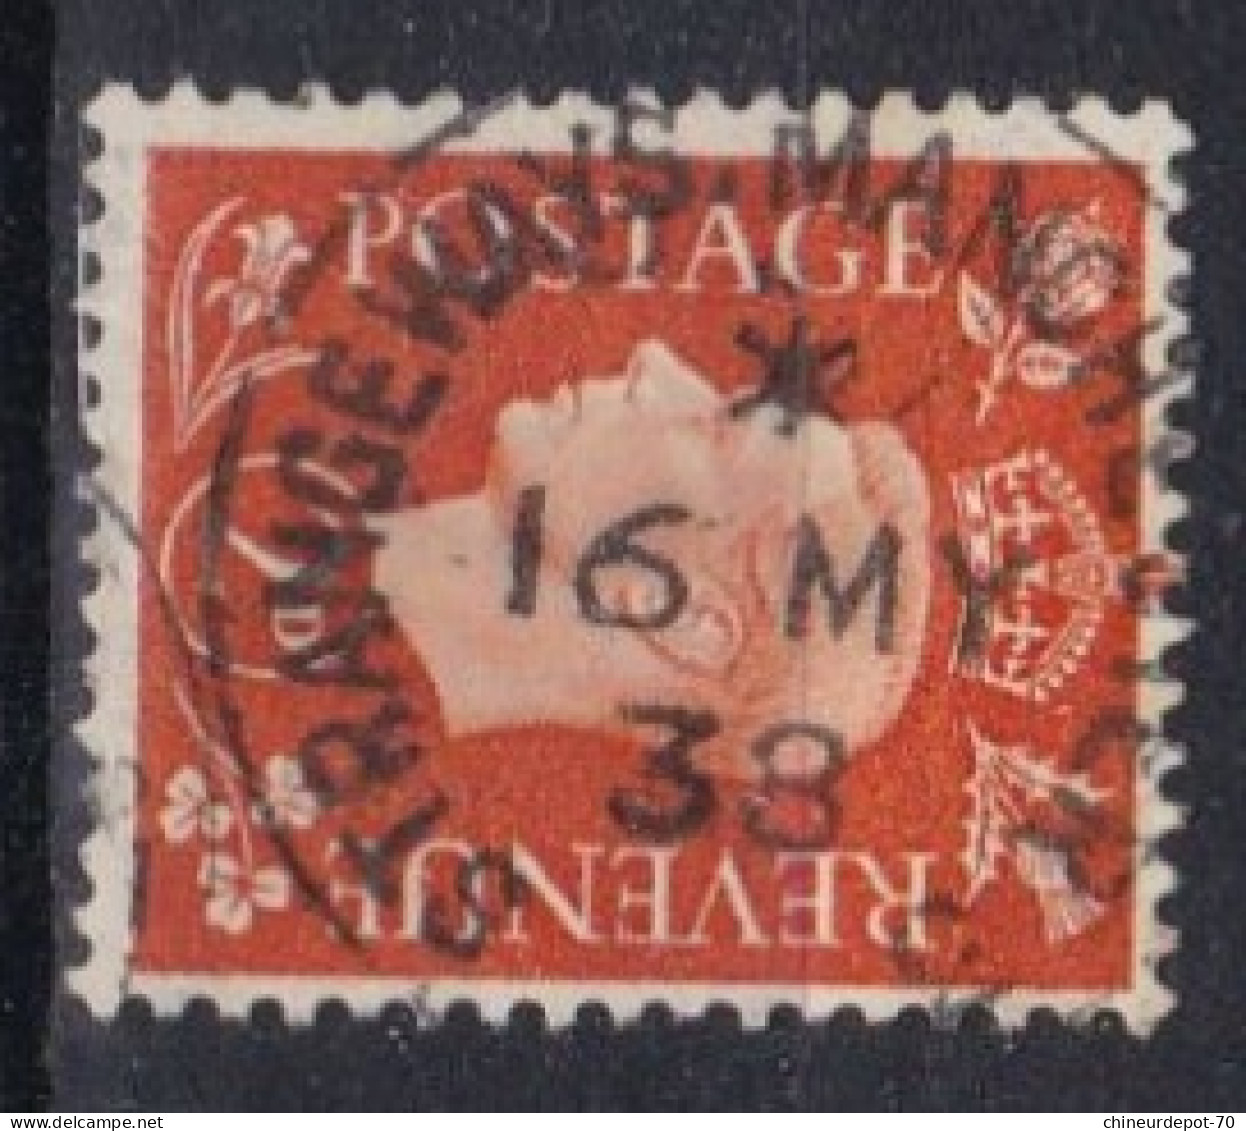 ROYAUME UNI KING STRANGE WAYS Manchester Strangeways 38 BELLE OBLITERATION - Used Stamps